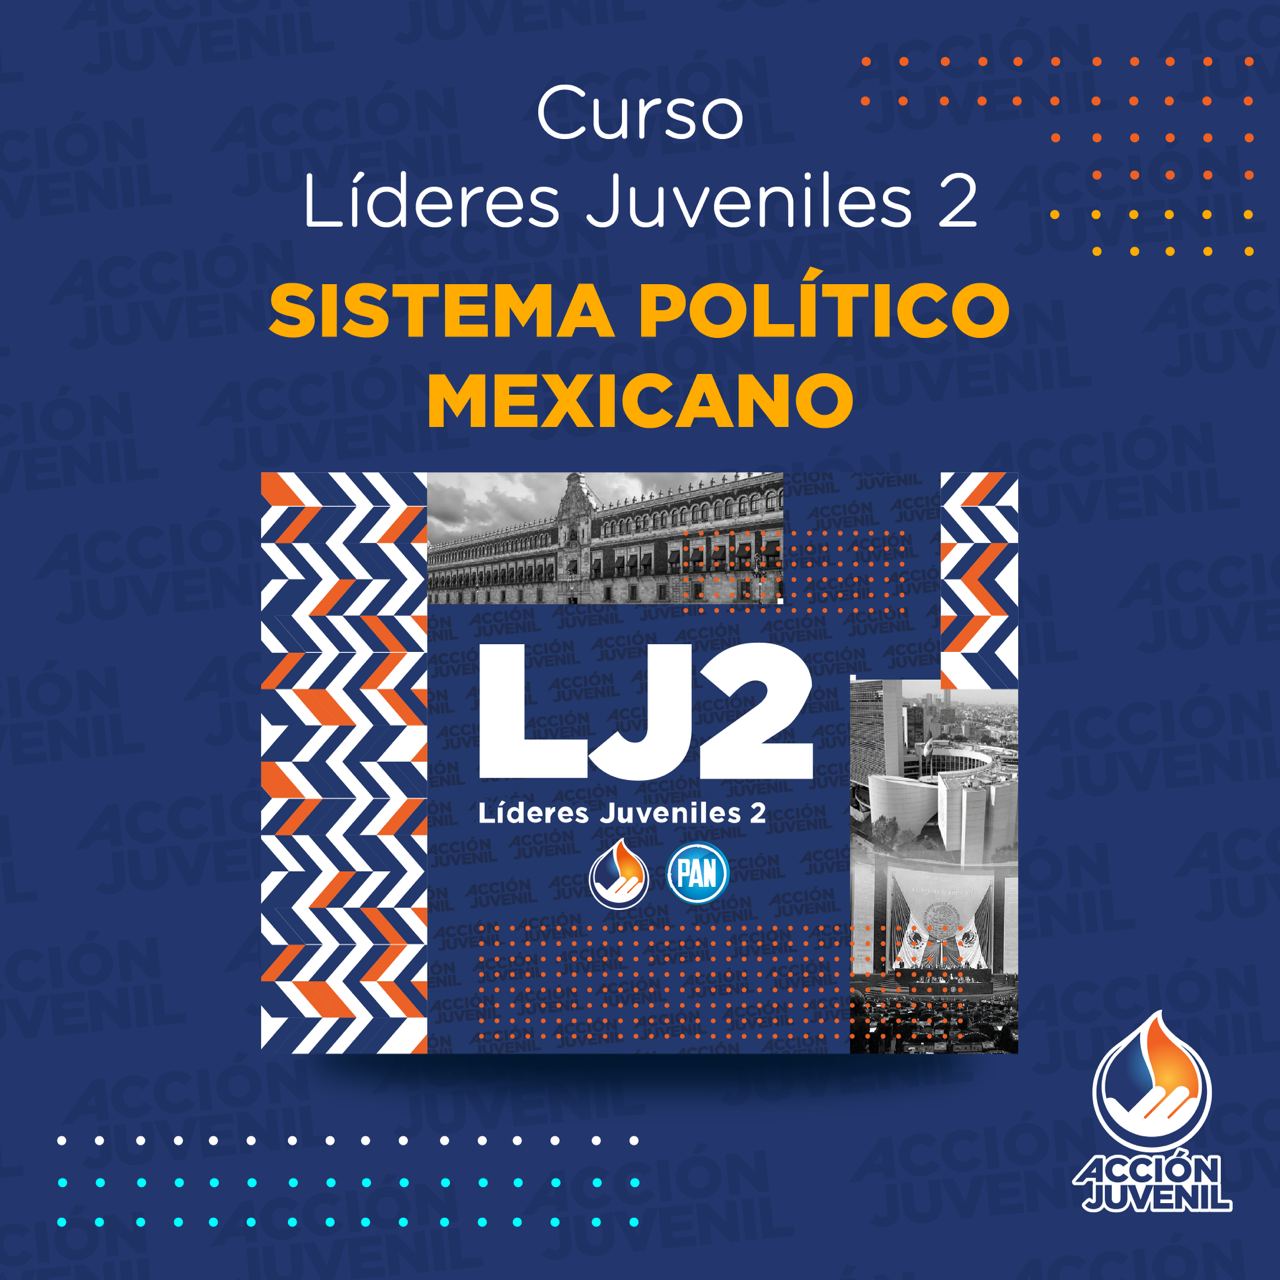 Curso Líderes Juveniles 2 Sistema Político Mexicano Chihuahua, CHH 19/02/22